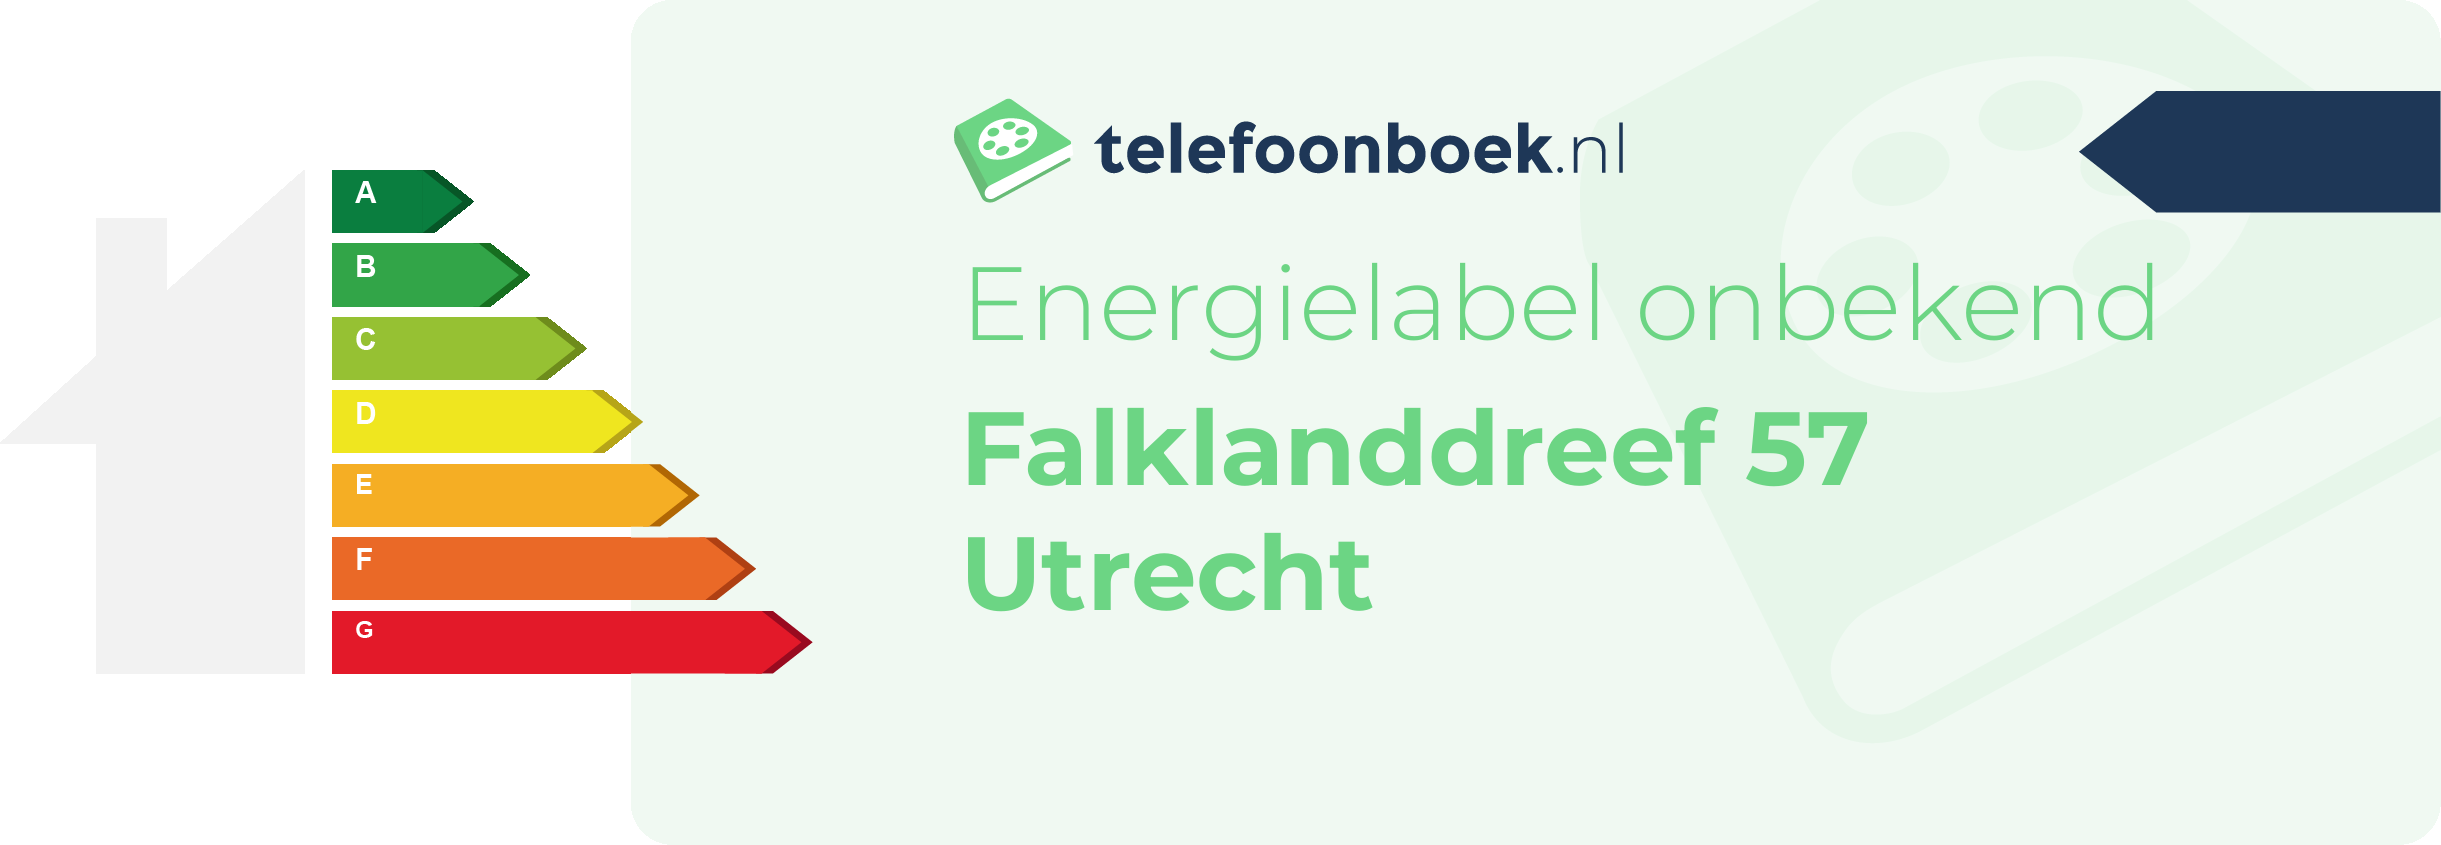 Energielabel Falklanddreef 57 Utrecht